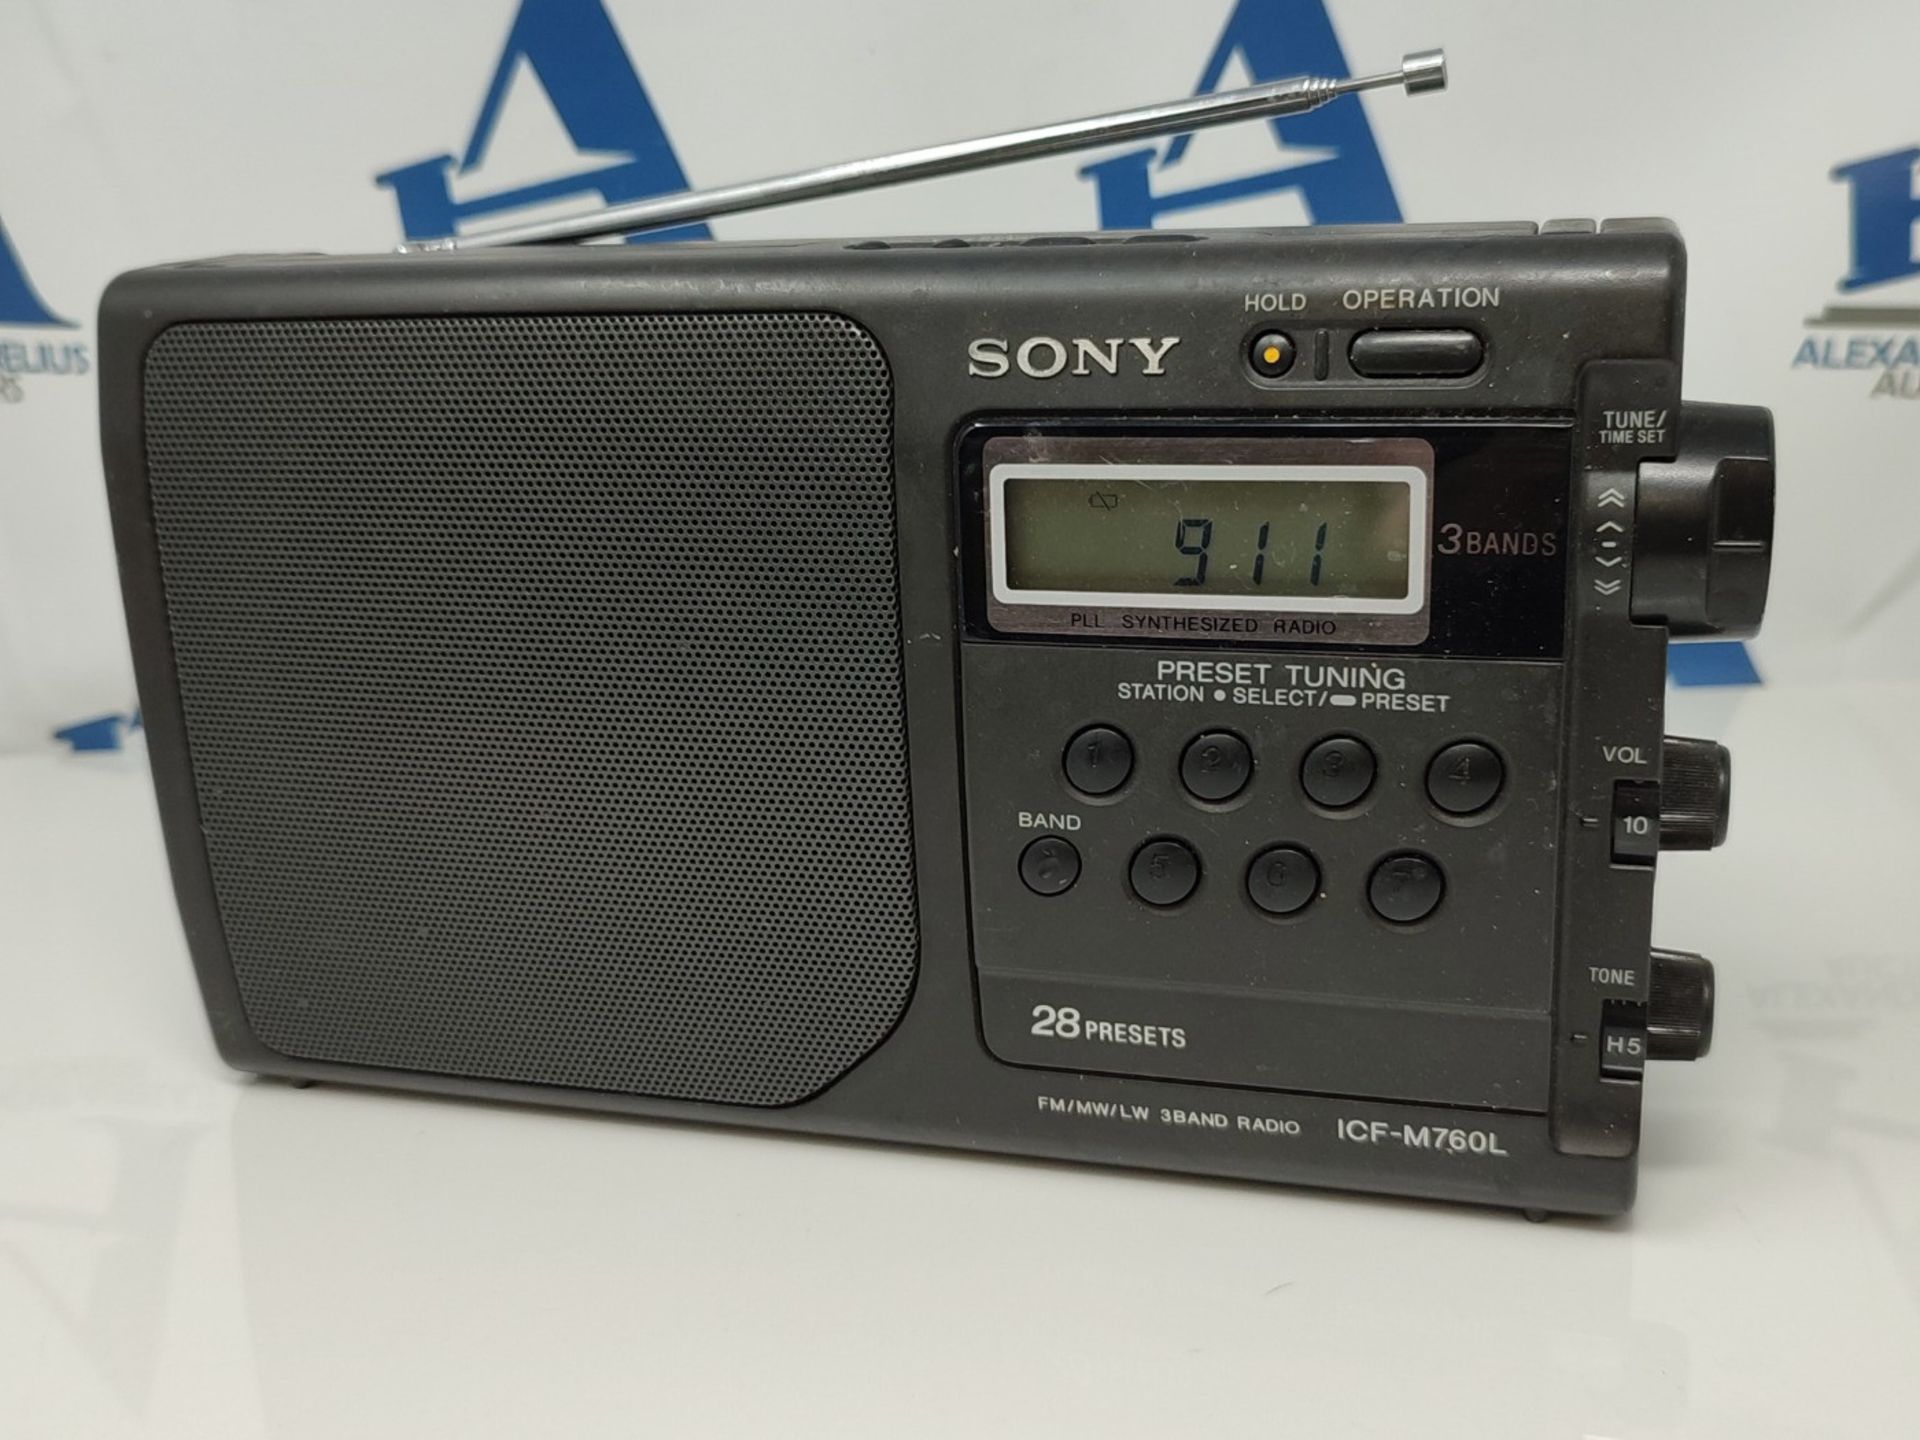 SONY 3band radio ICF-M760L